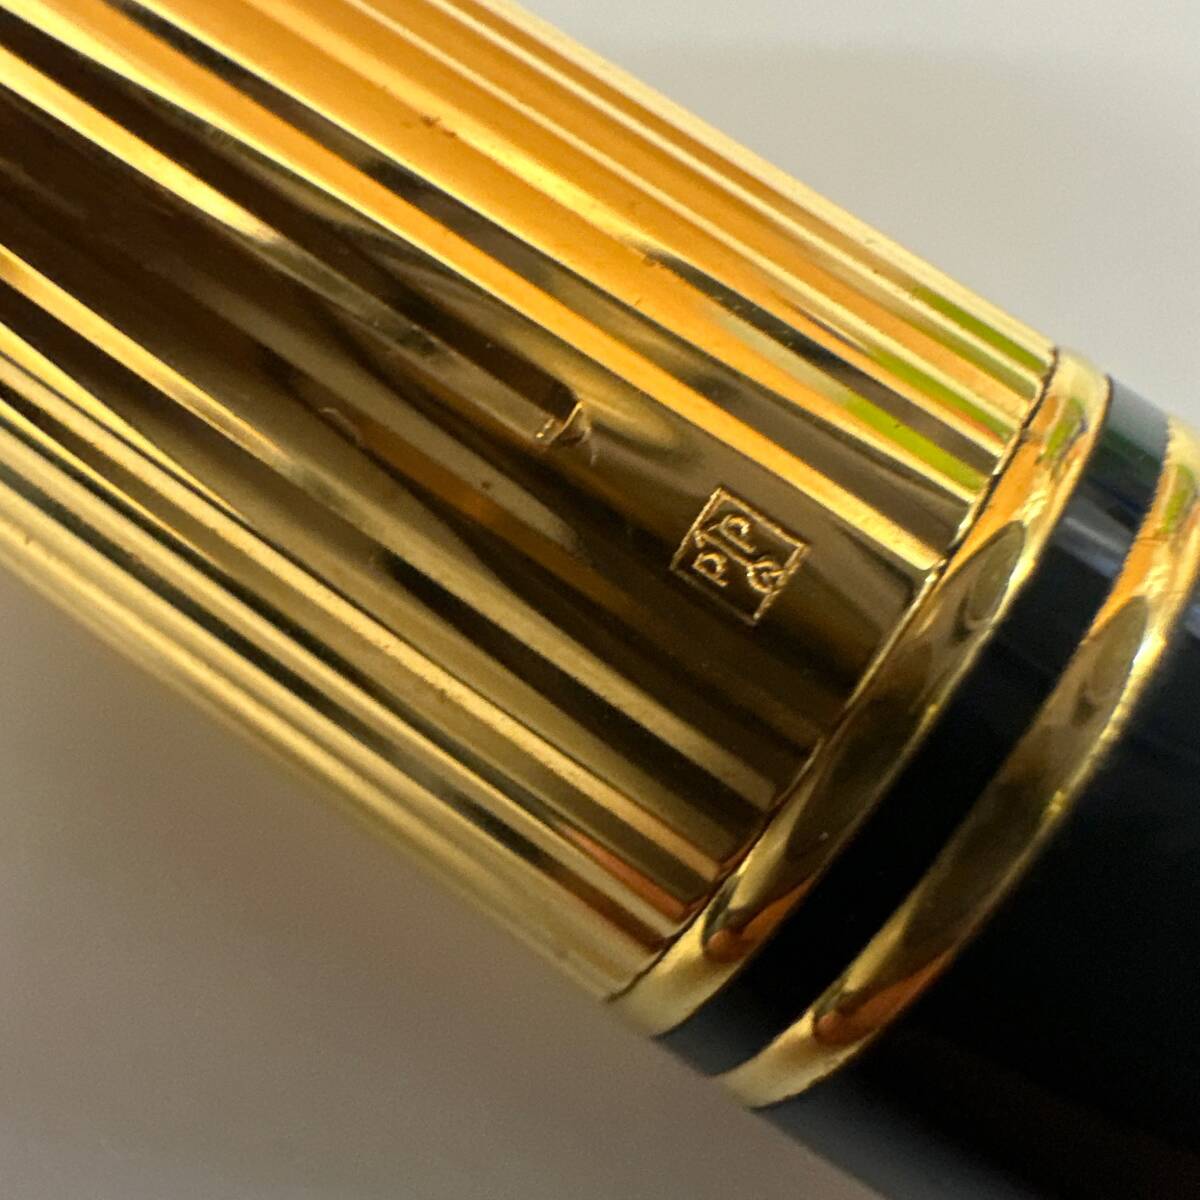 【TM0429】PARKER パーカー デュオフォールド 万年筆 ペン先18K 750 木製ケース付 ゴールド × ブラックカラー 筆記用具 文房具の画像5